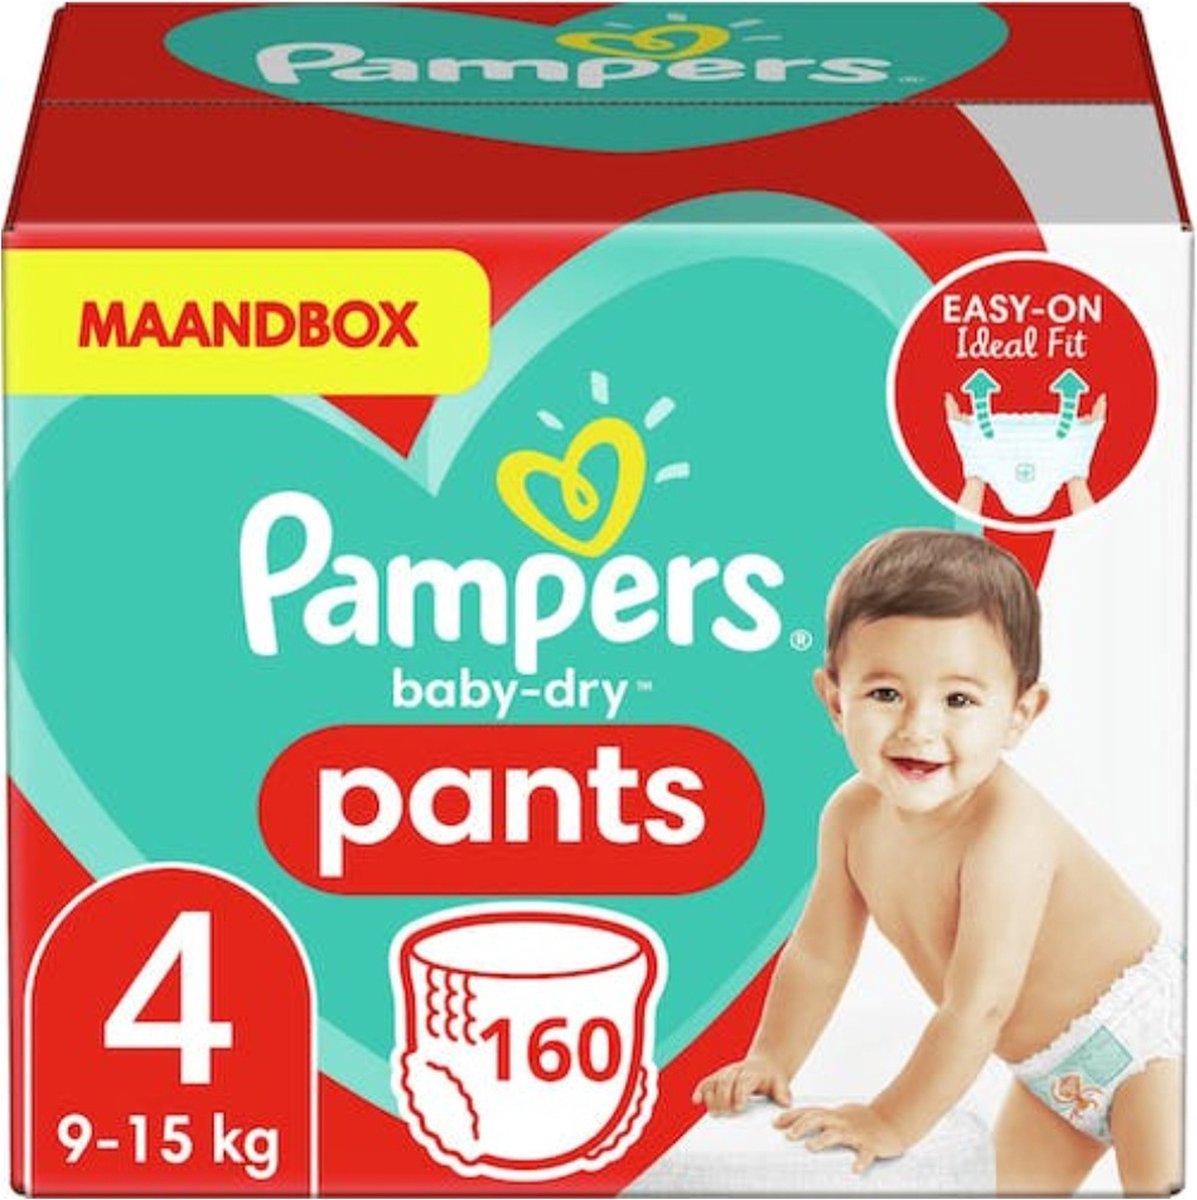 Pampers Baby Dry Pants taille 4, 180 couches acheter à prix réduit